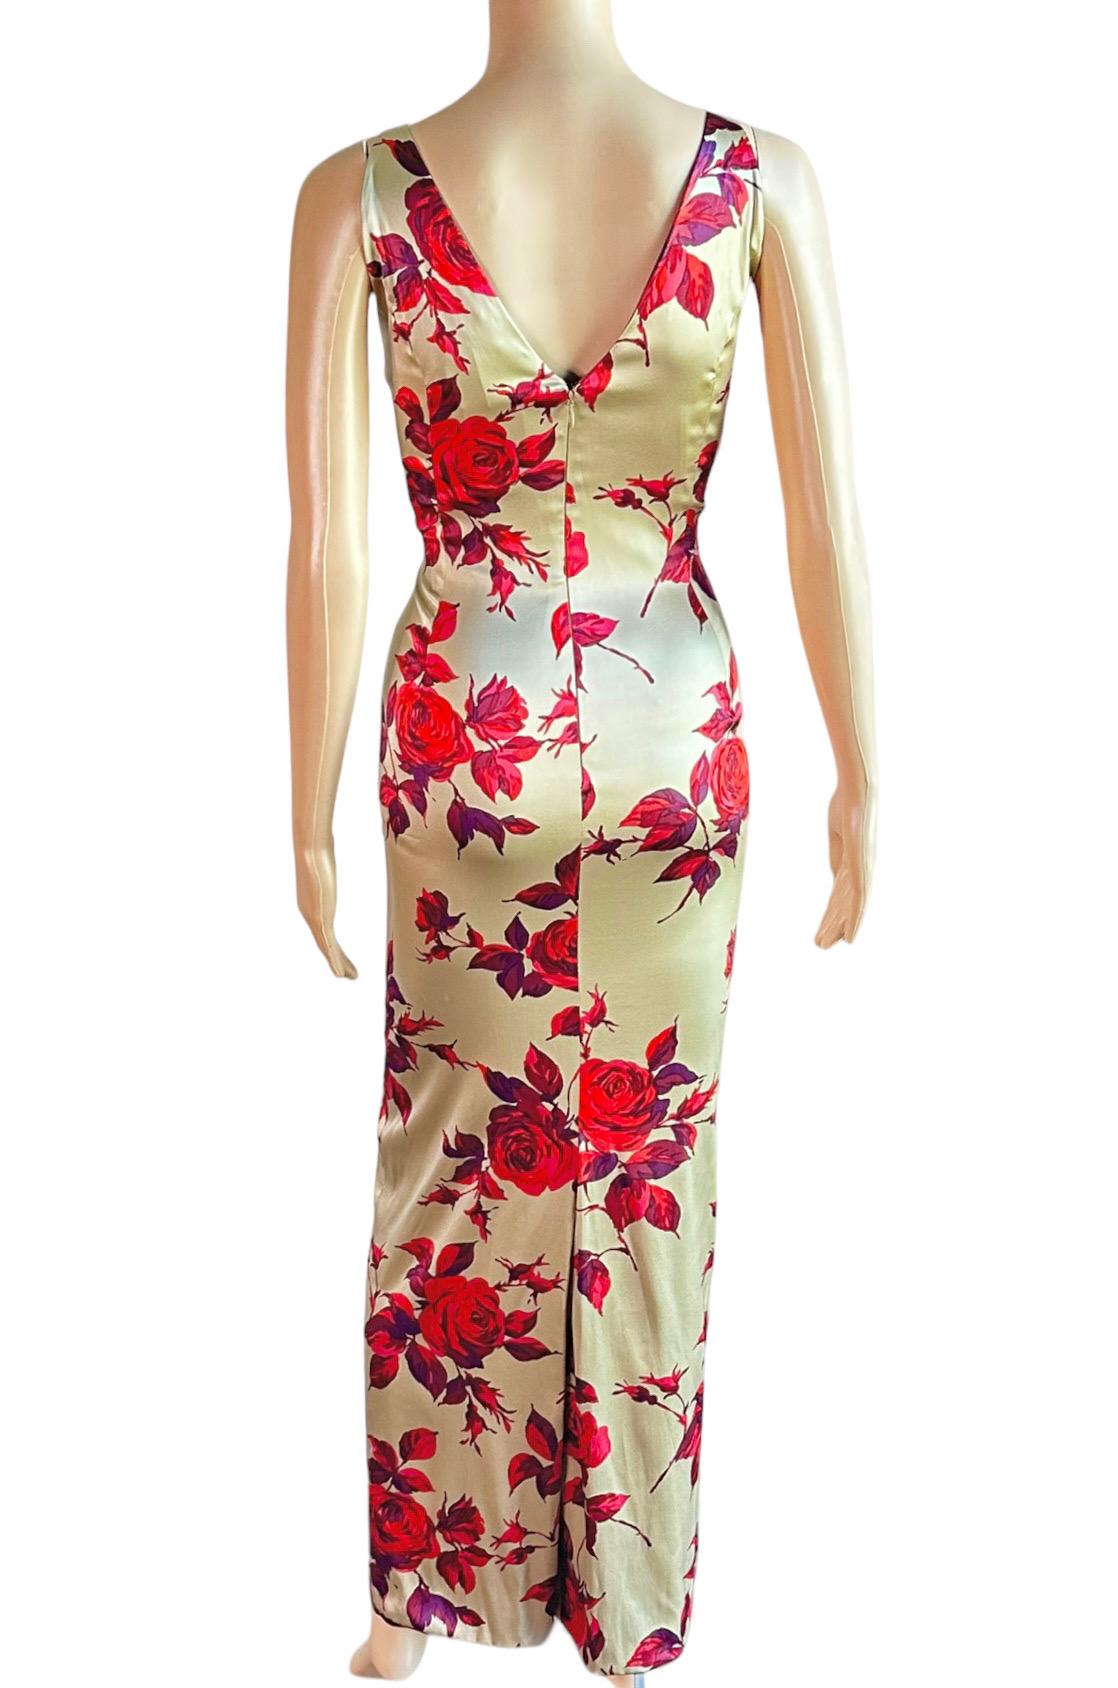 Dolce & Gabbana 1990's Vintage Unworn Silk Floral Rose Print Evening Dress Gown For Sale 4